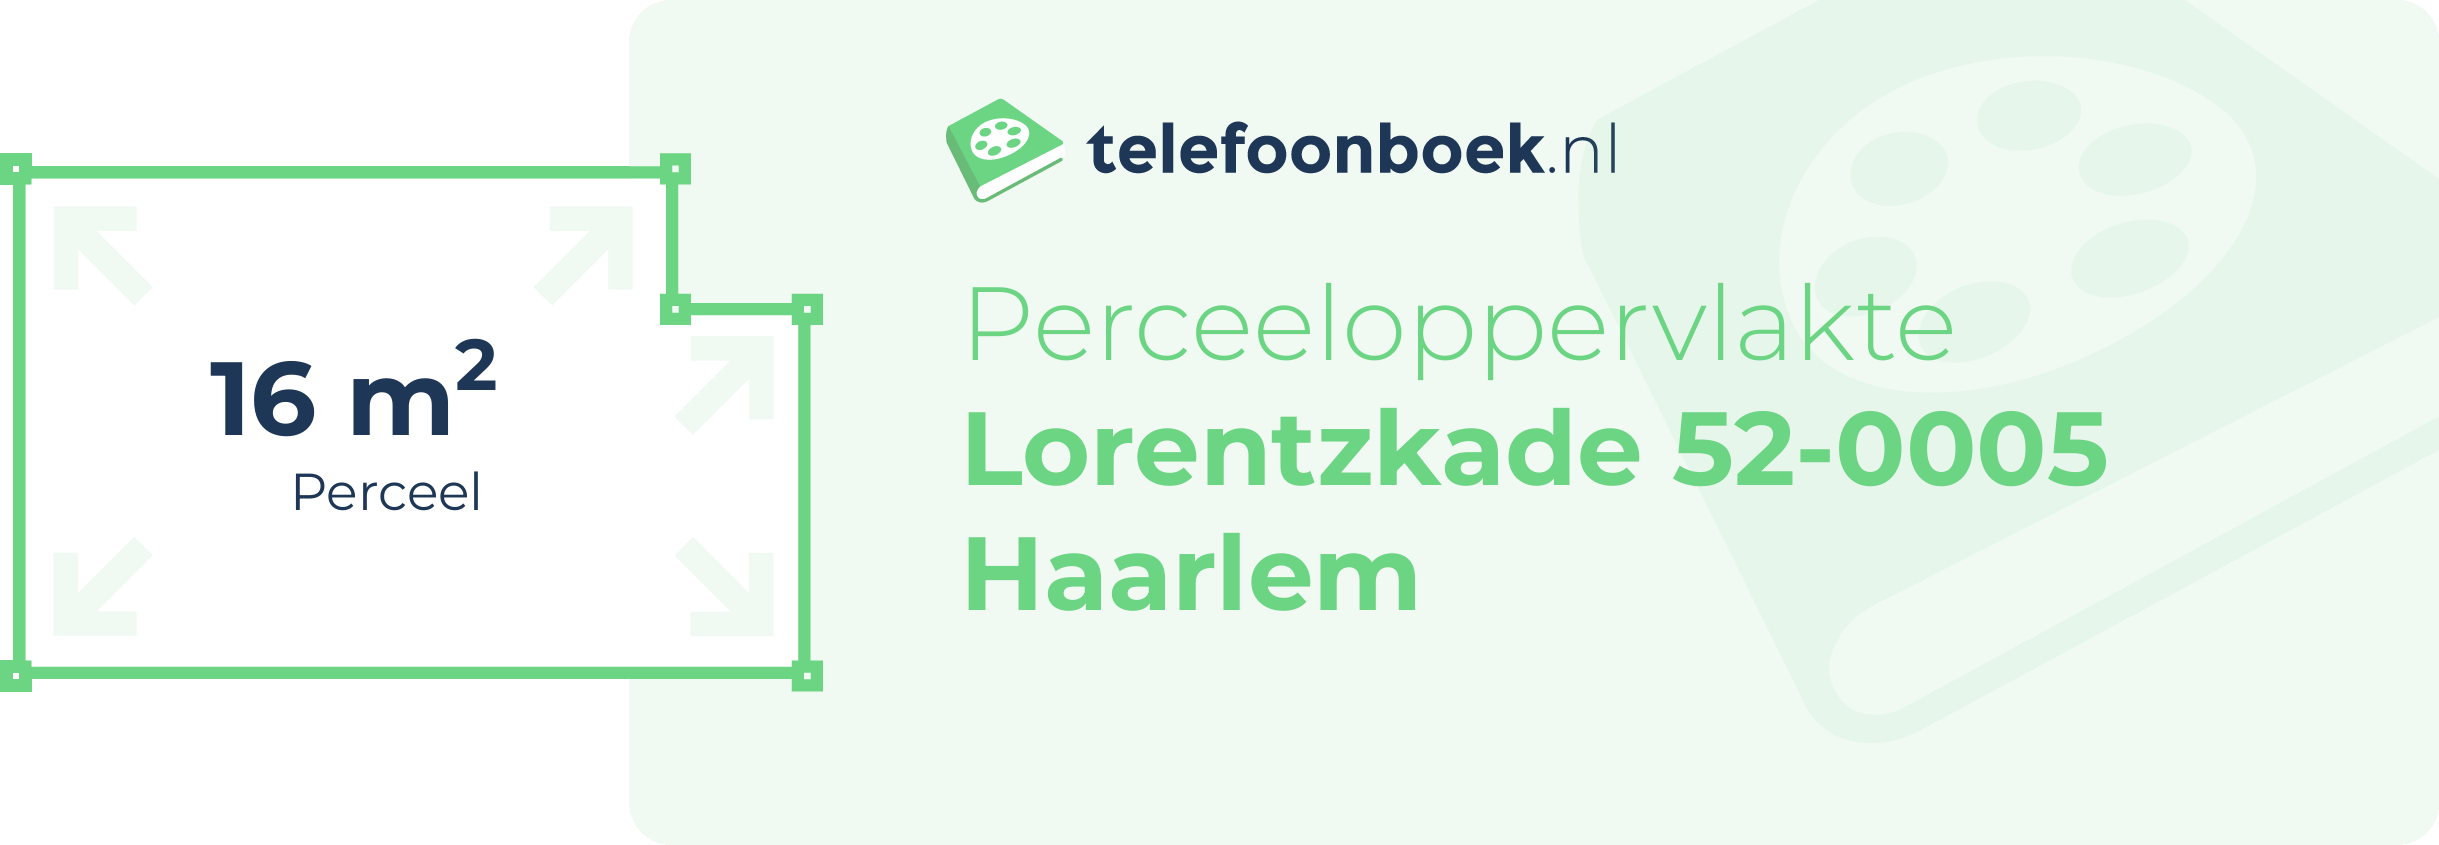 Perceeloppervlakte Lorentzkade 52-0005 Haarlem